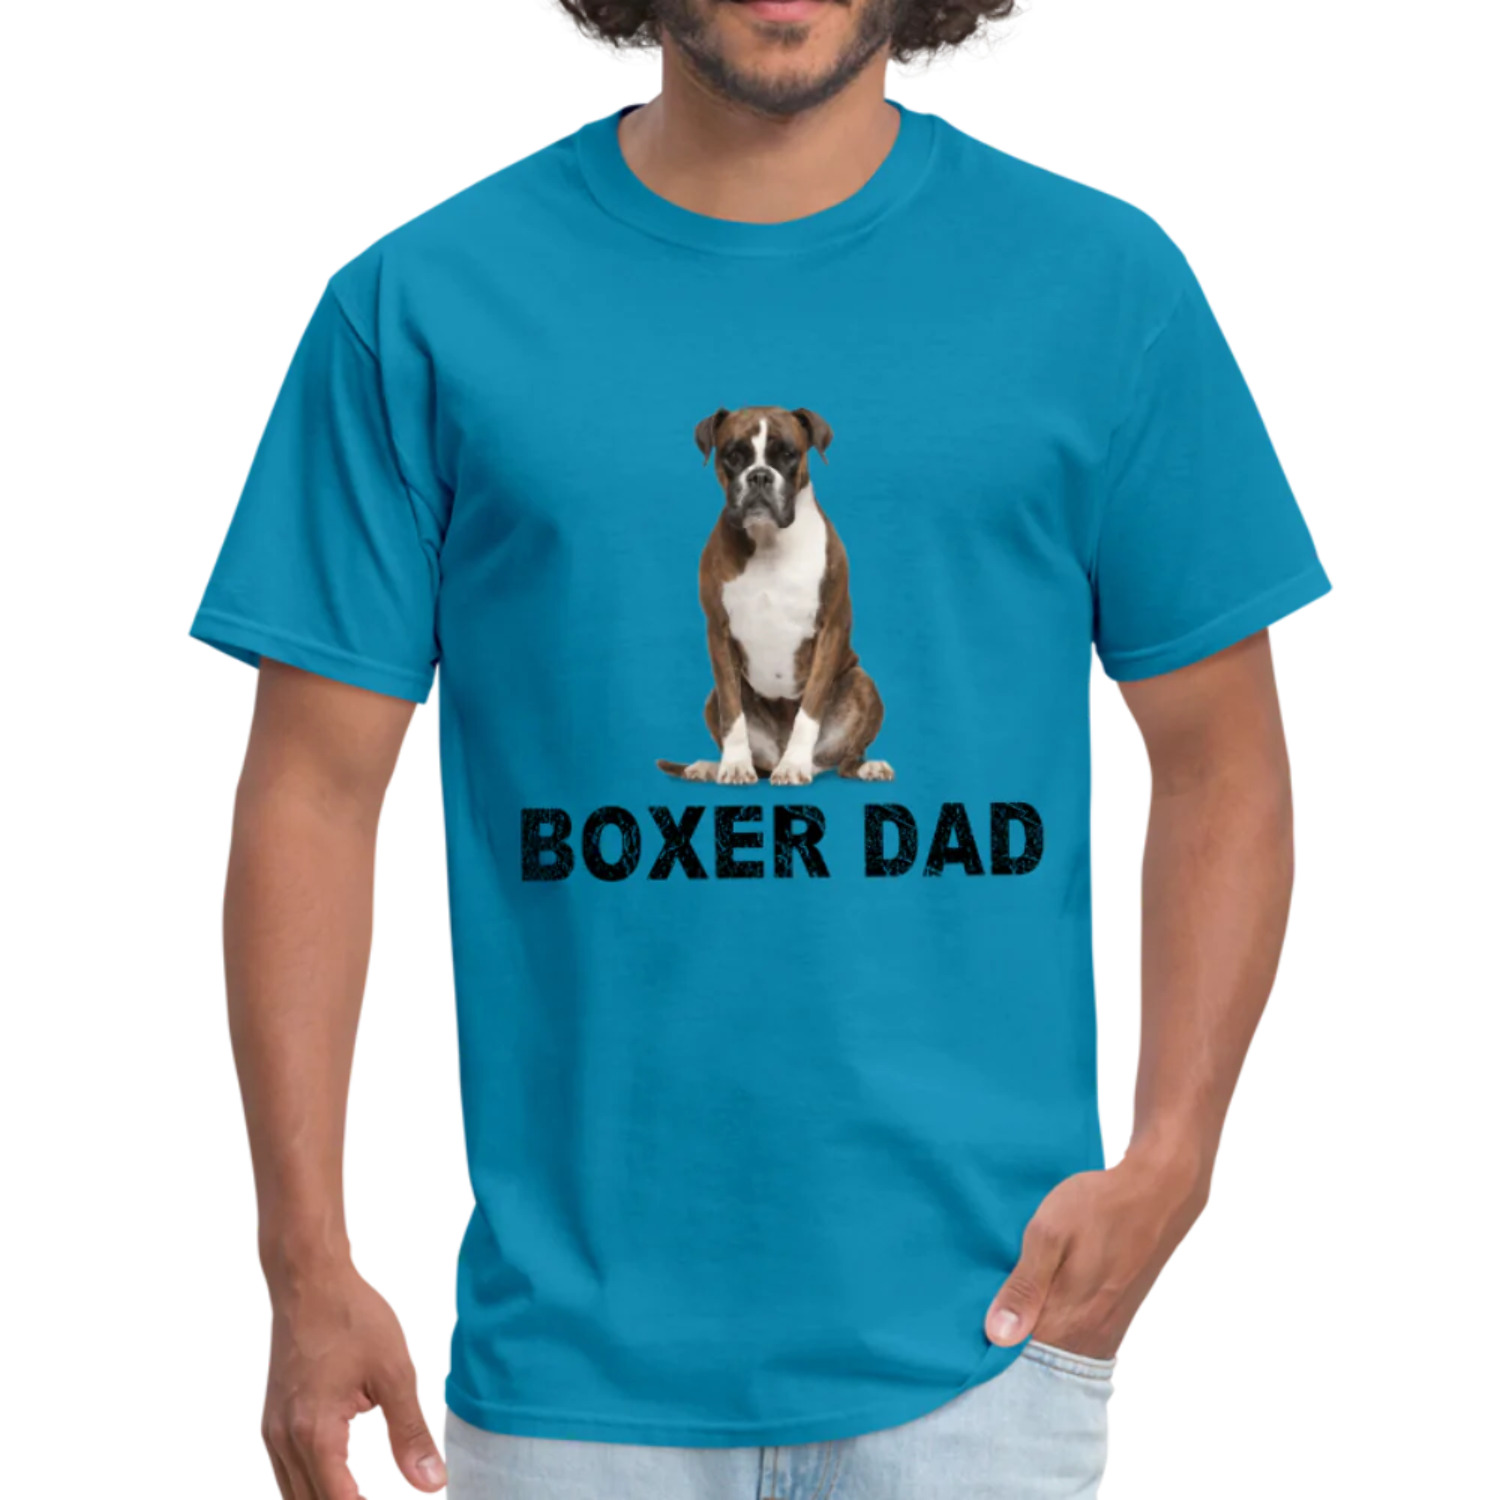 Boxer Dad Shirt, Dog Dad TShirt, Gift For Dog Lover, Dog Tshirt, Gift for Boxer Dad, Dog Papa Tee, Dog Dad Gift, Boxer Lover Shirt - image 4 of 11